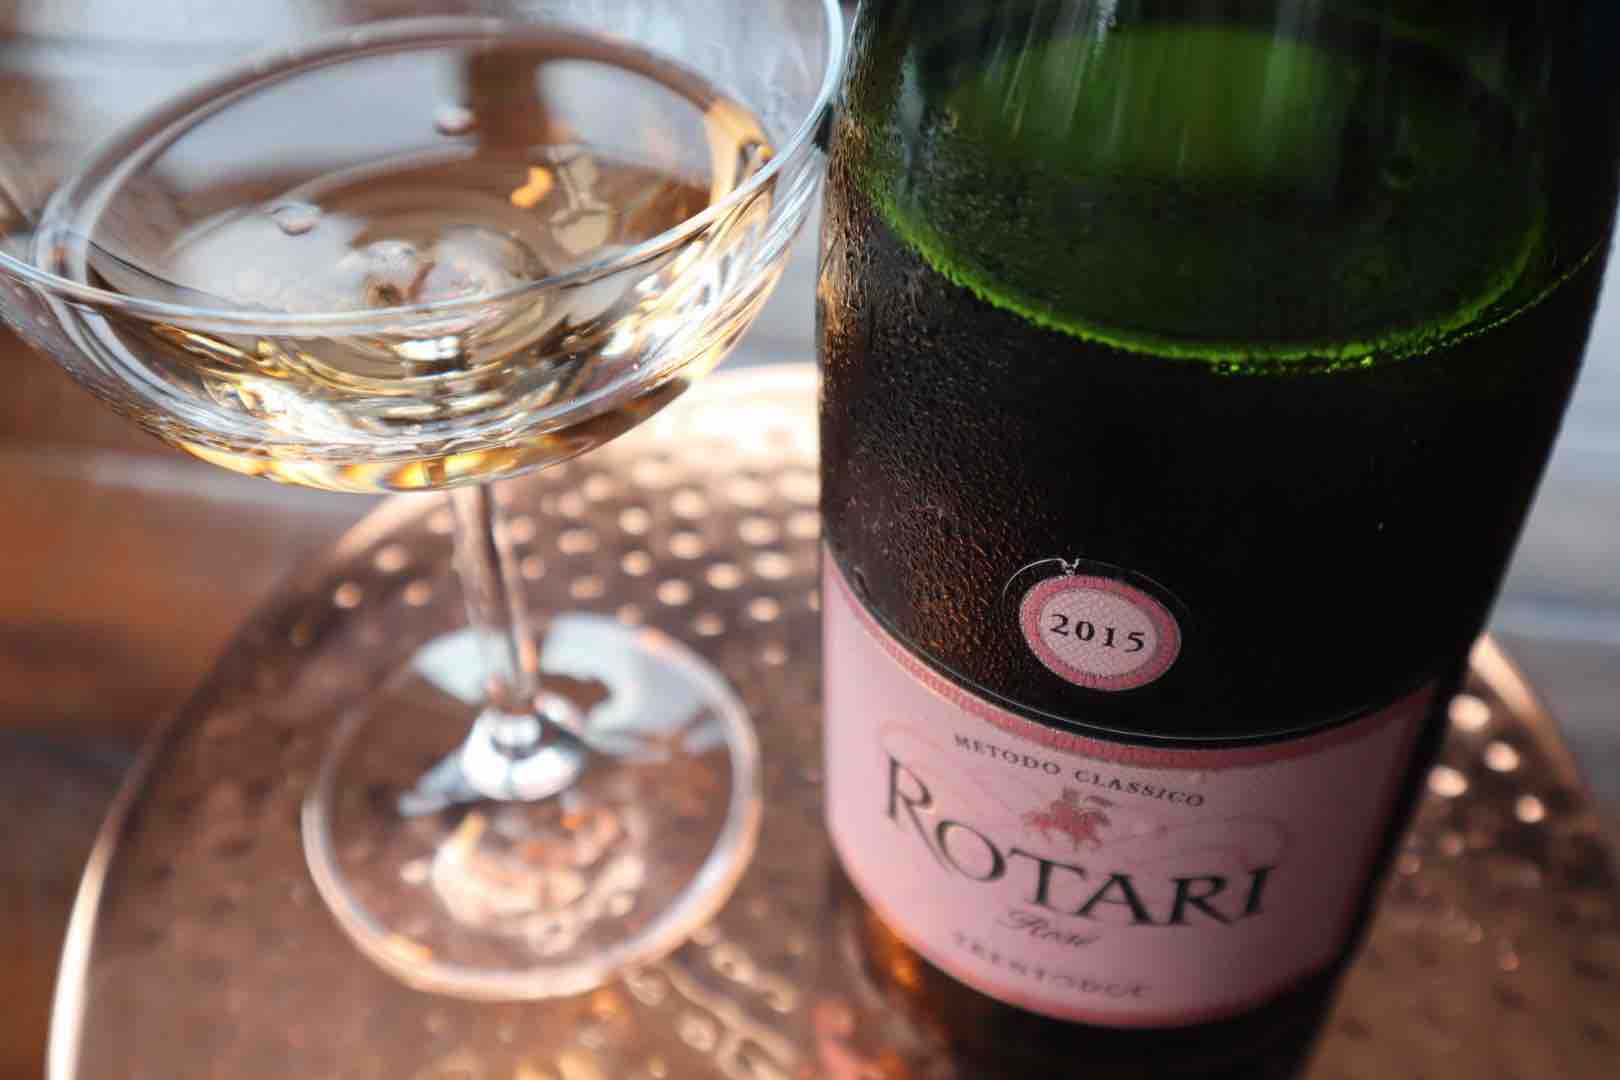 Rotari Brut Rosé Is The Best Rosé Wines for Picnic Season